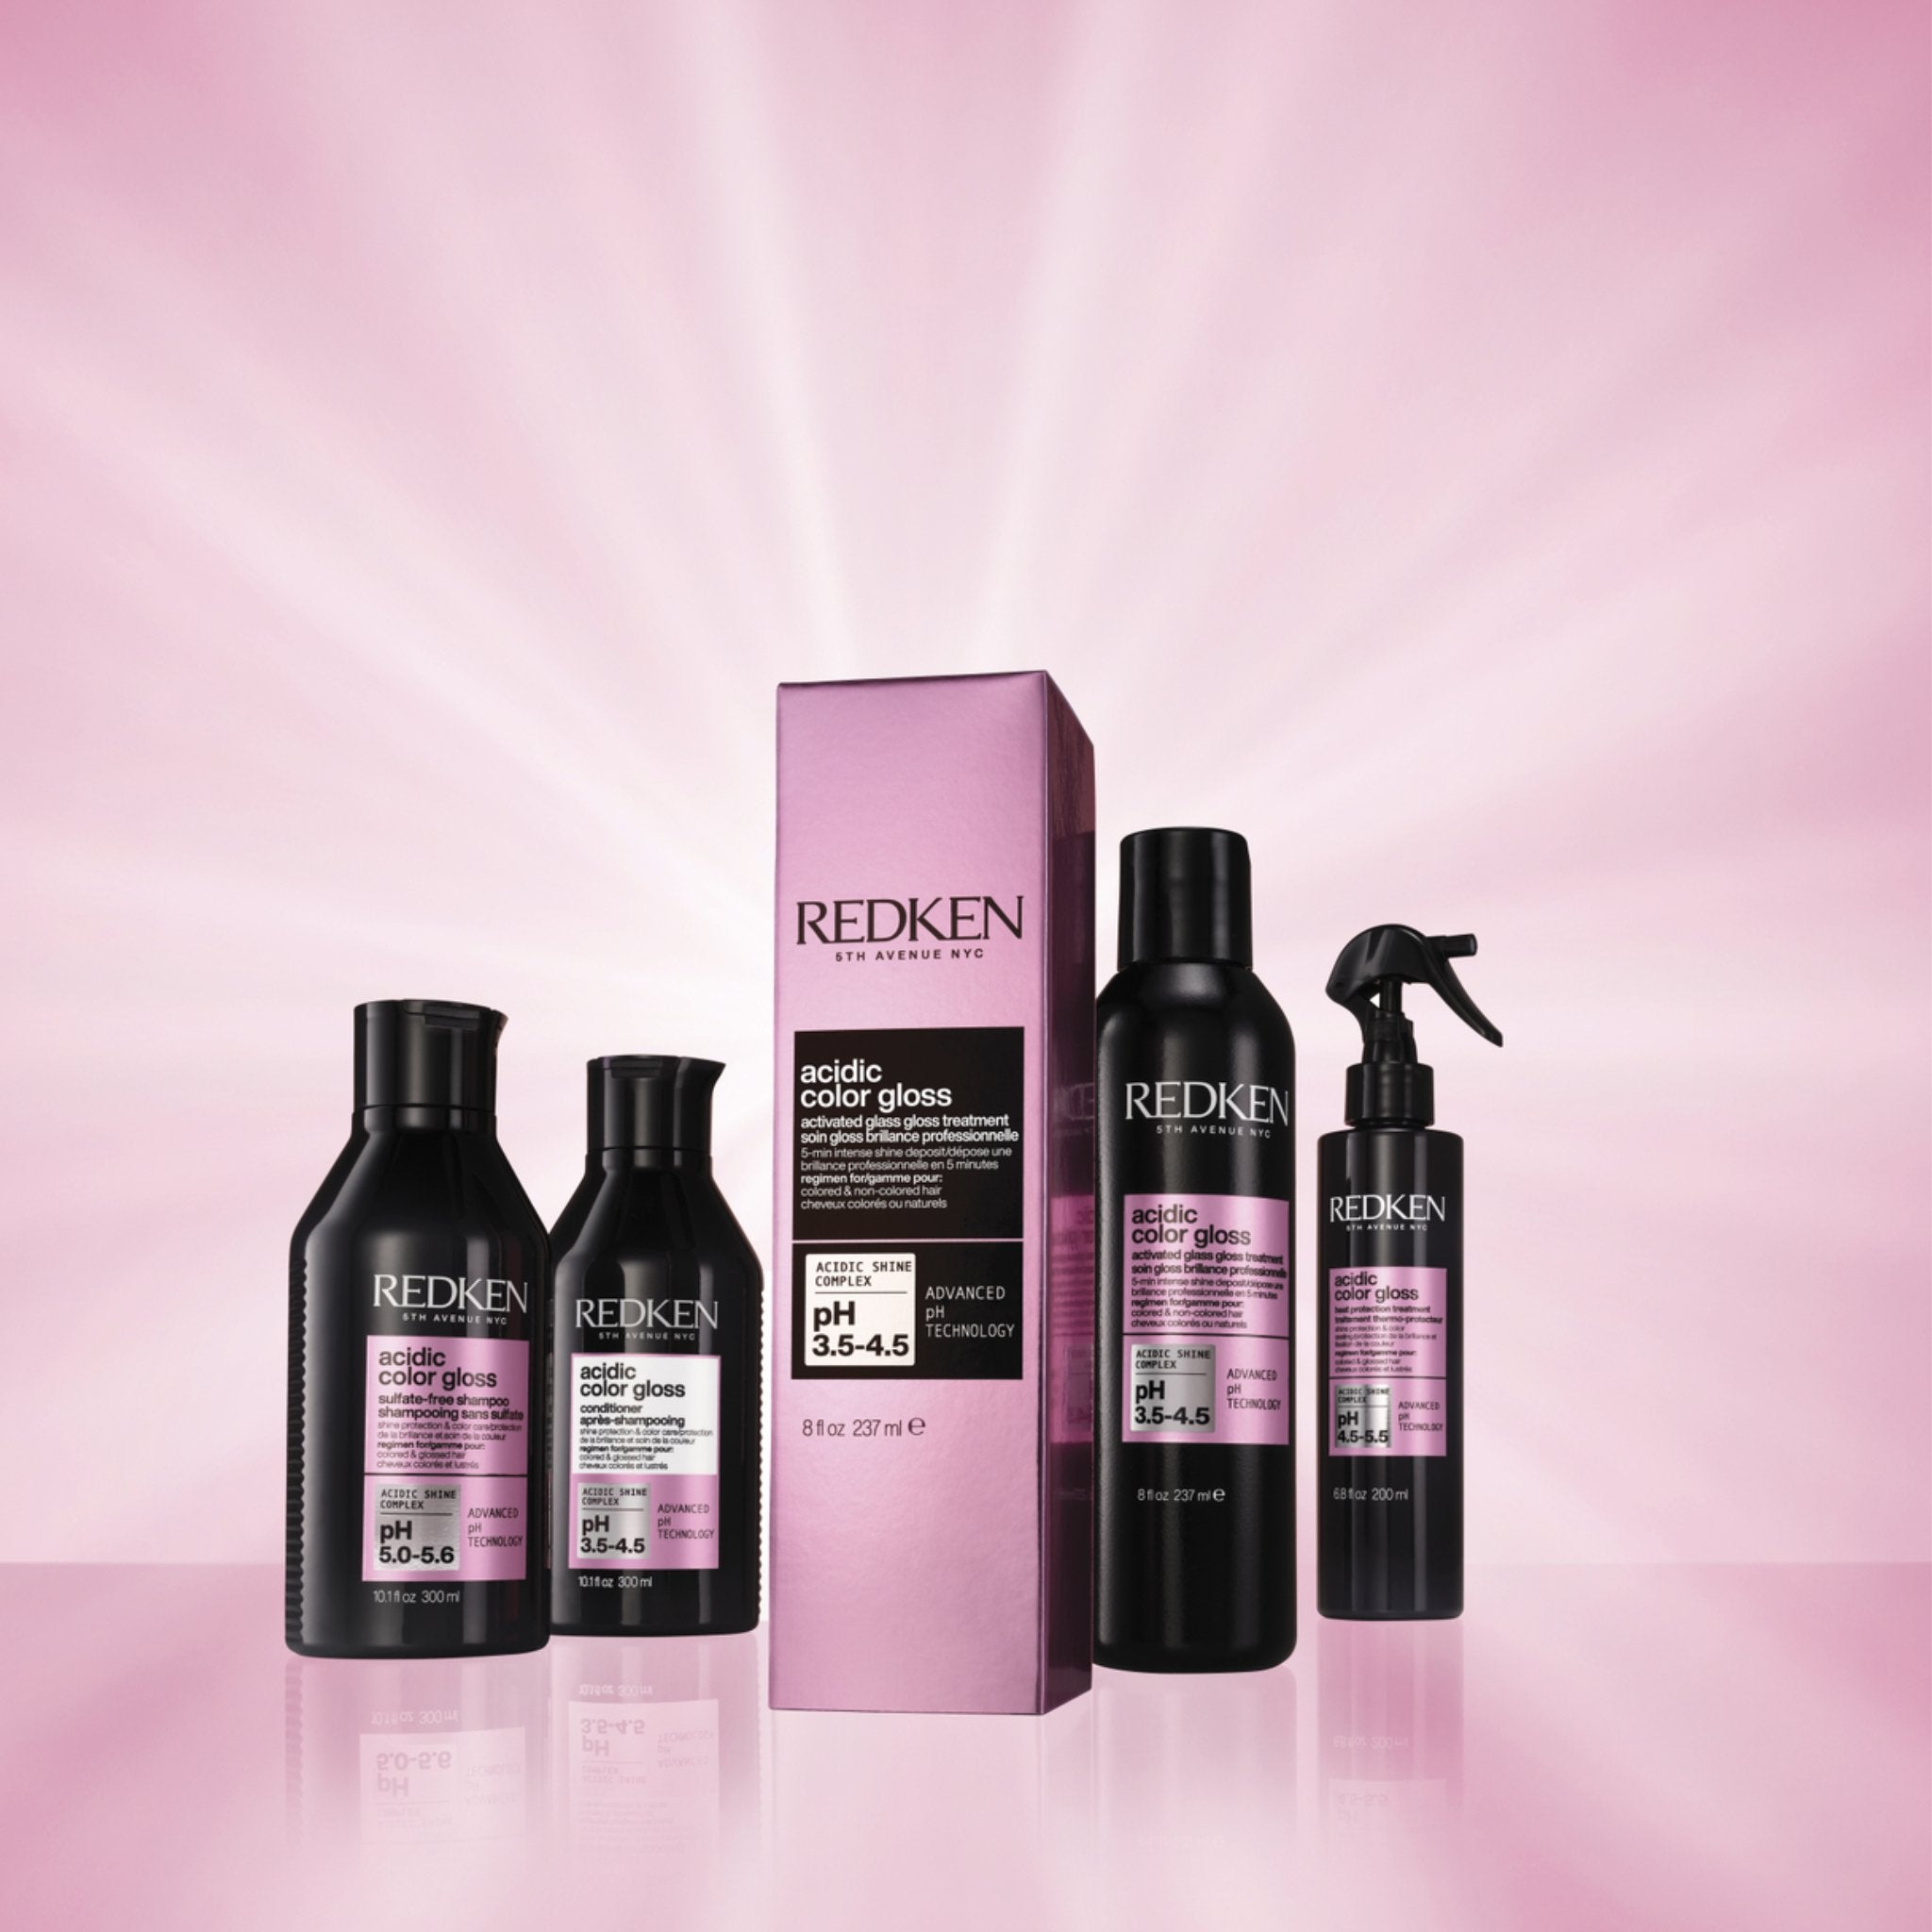 Redken. Acidic Color Gloss Shampoing - 1000 ml - Concept C. Shop